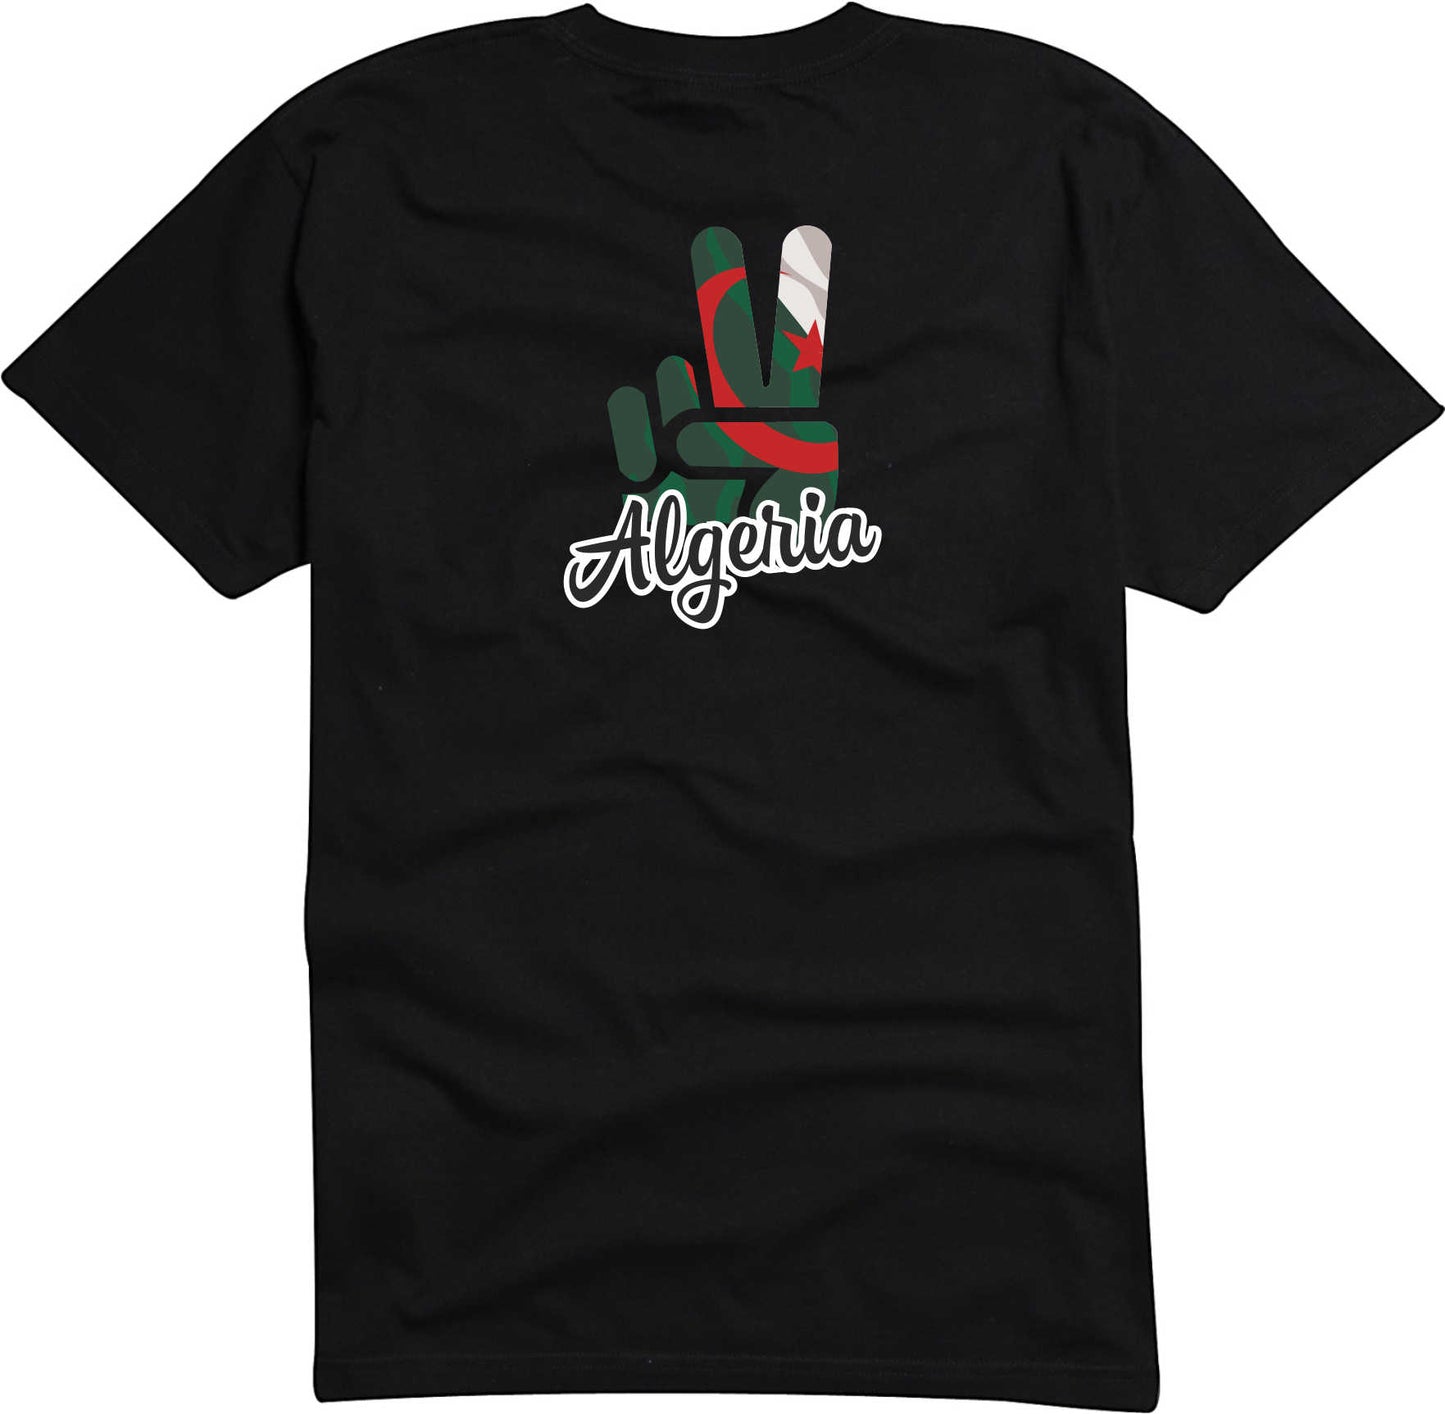 T-Shirt Herren - Victory - Flagge / Fahne - Algeria - Sieg